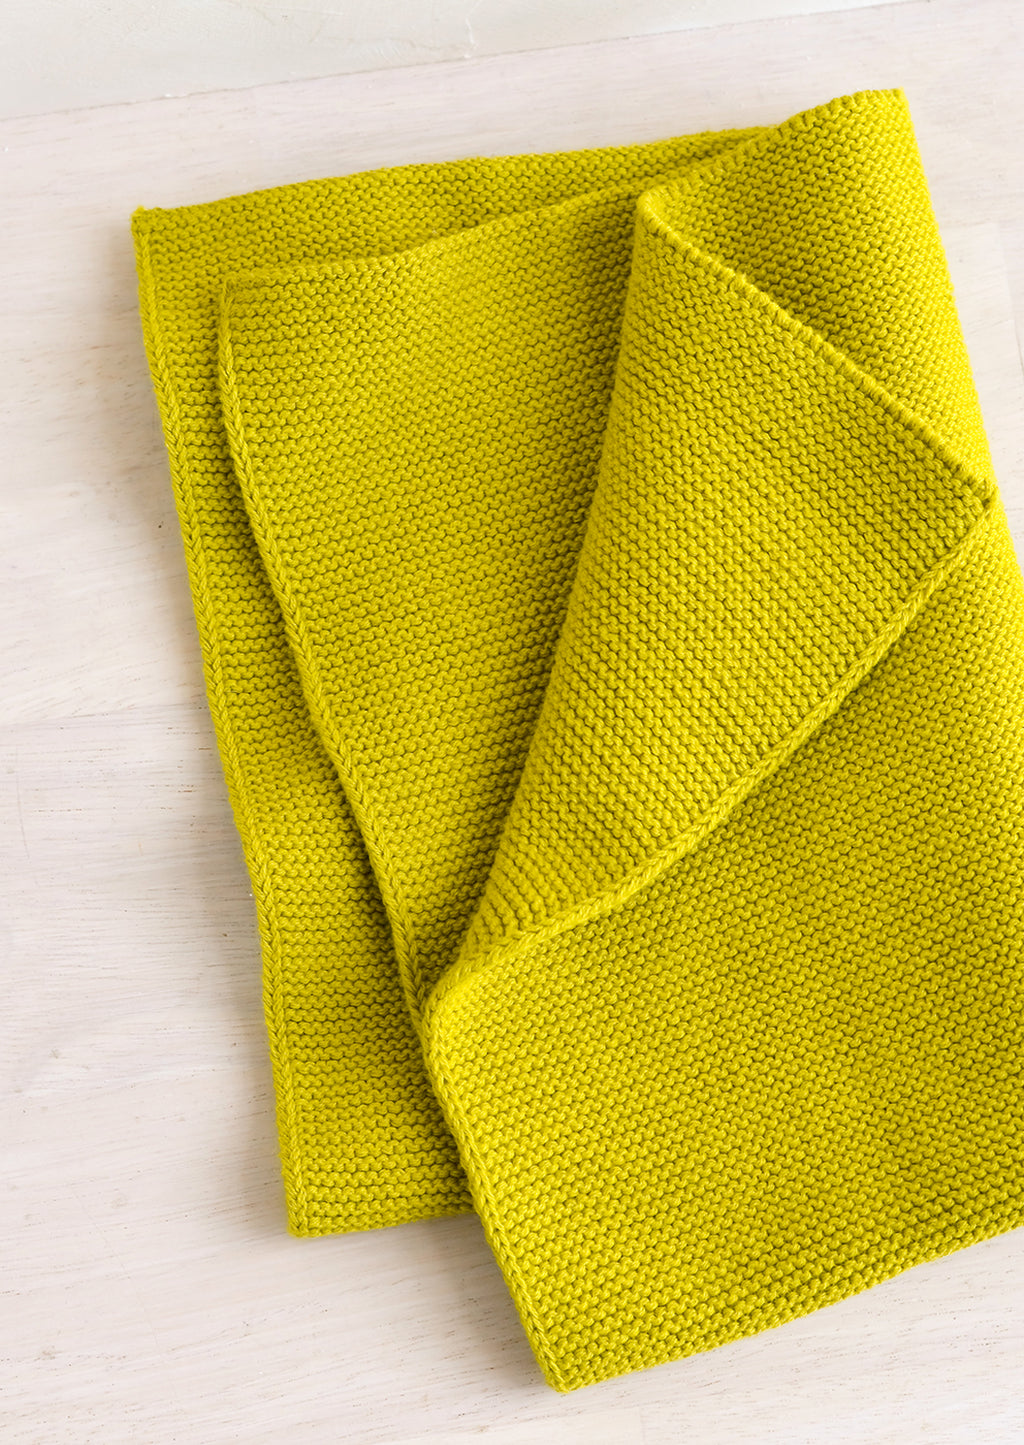 Citron: A knit cotton dish towel in citron green.